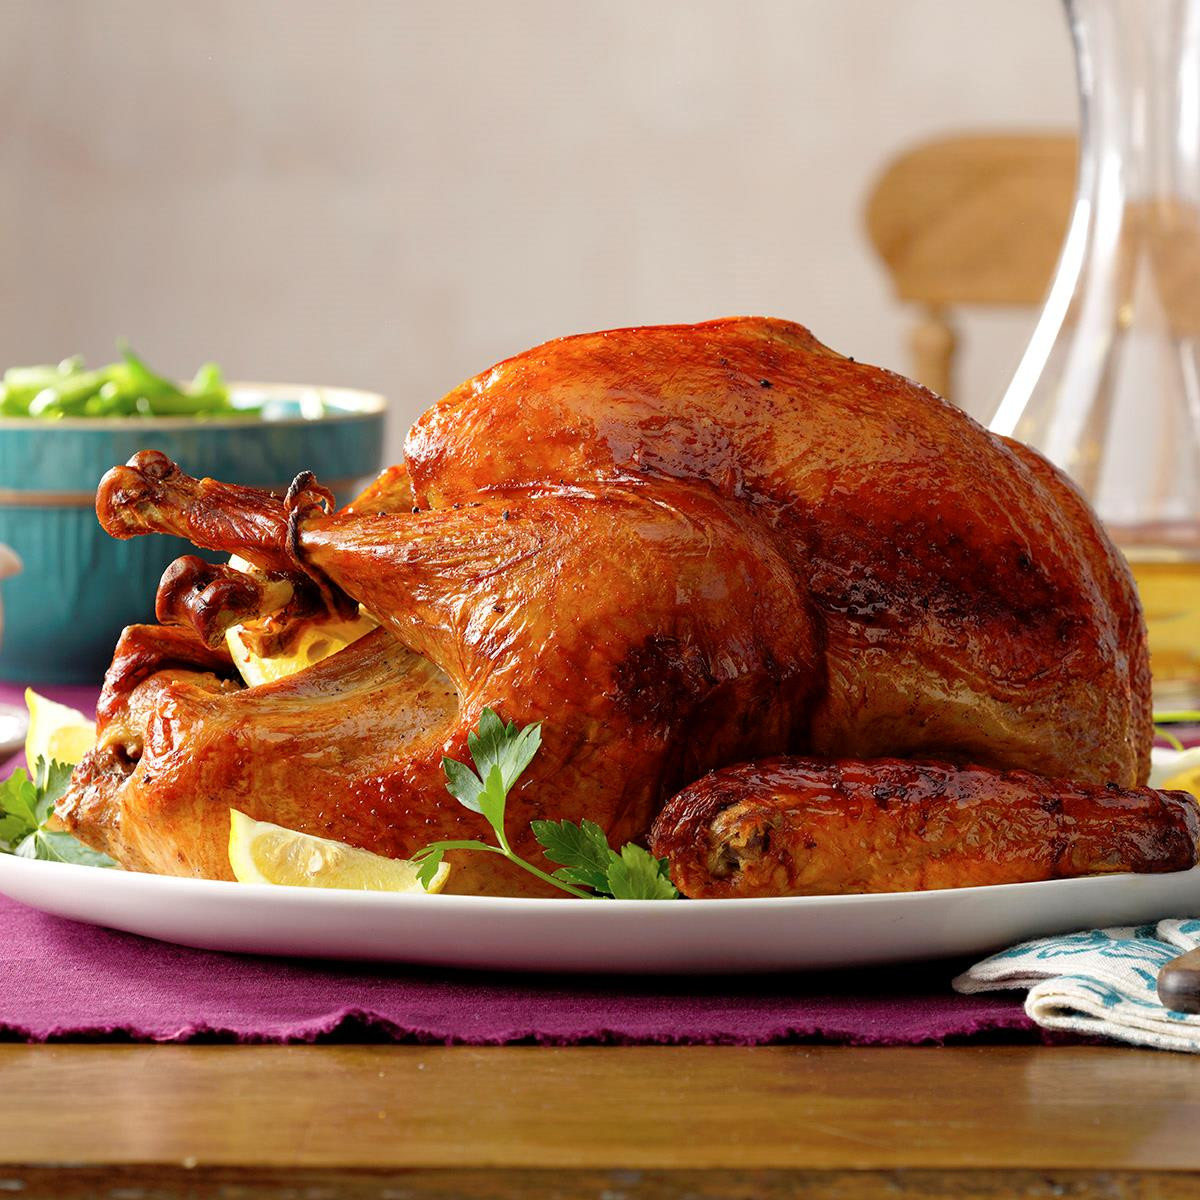 Picture Of Thanksgiving Turkey
 Marinated Thanksgiving Turkey Recipe